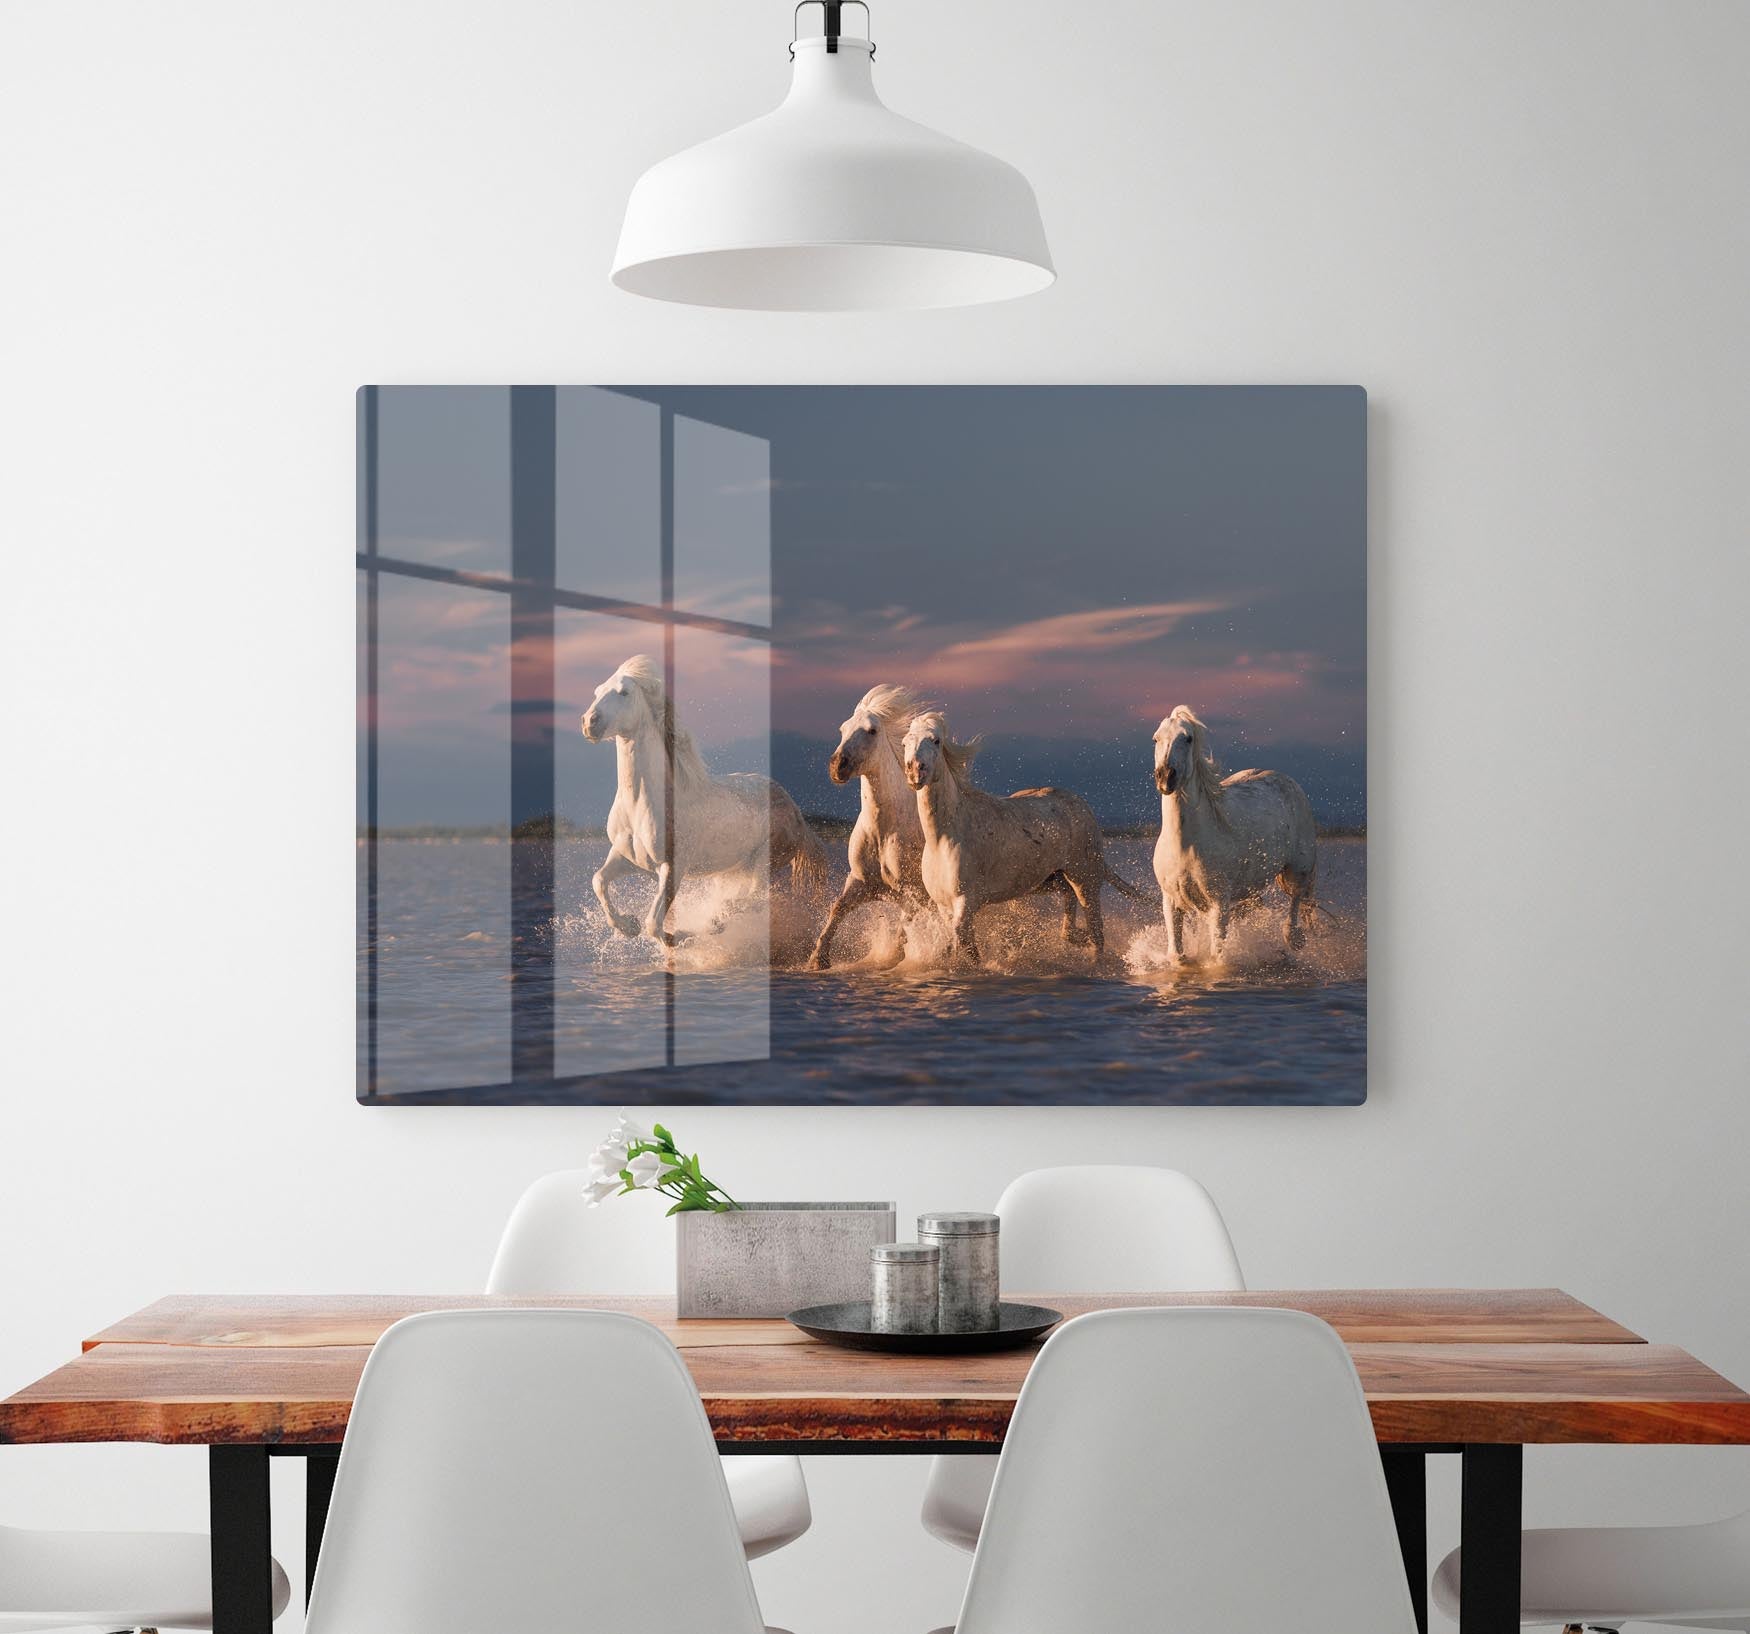 Wite Horses Running In Water 2 HD Metal Print - Canvas Art Rocks - 2